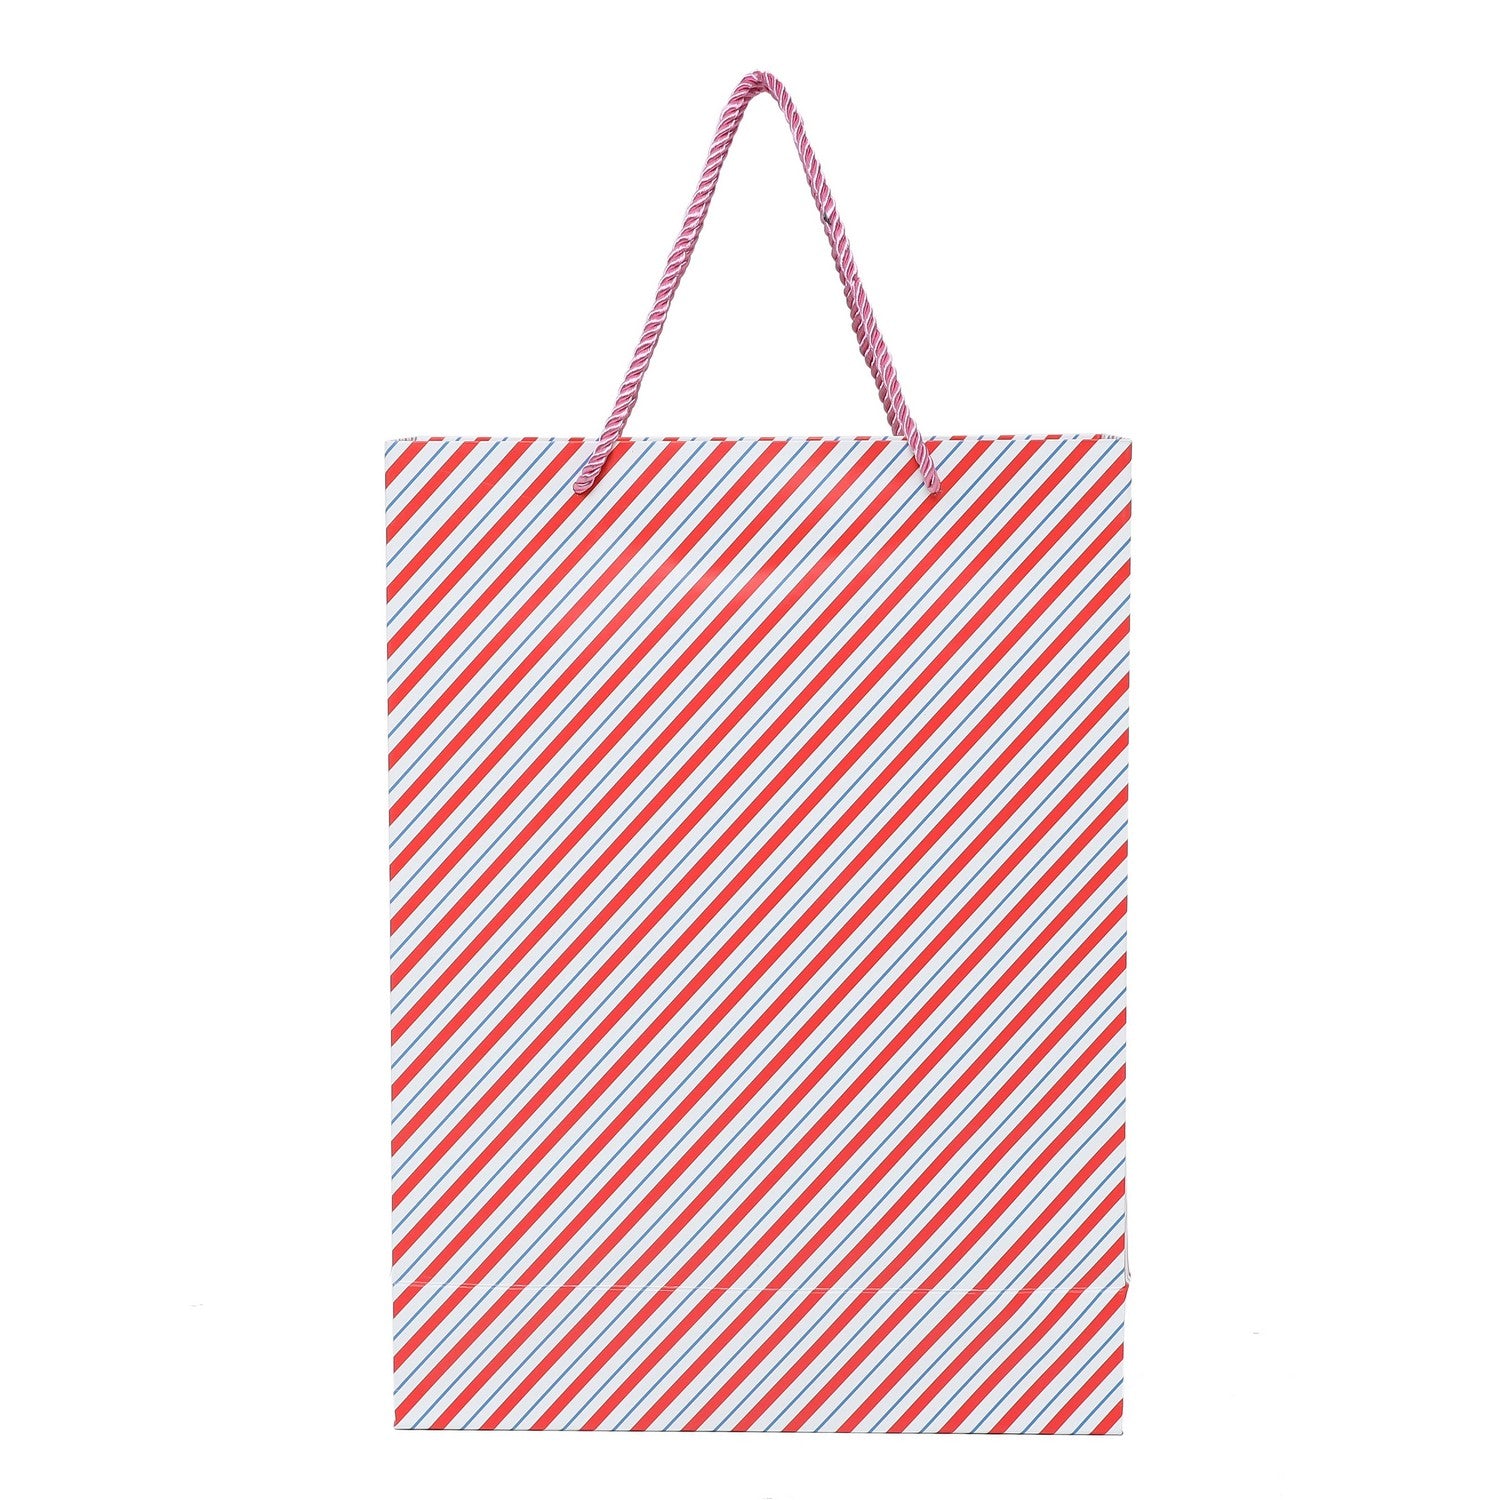 SHUBAN Stripped Paper Bag for Gifting, Weddings, Anniversary, Birthday, Holiday Presents (34 X 25 X 10 CM ) - Set of 5 | Book Bargain Buy